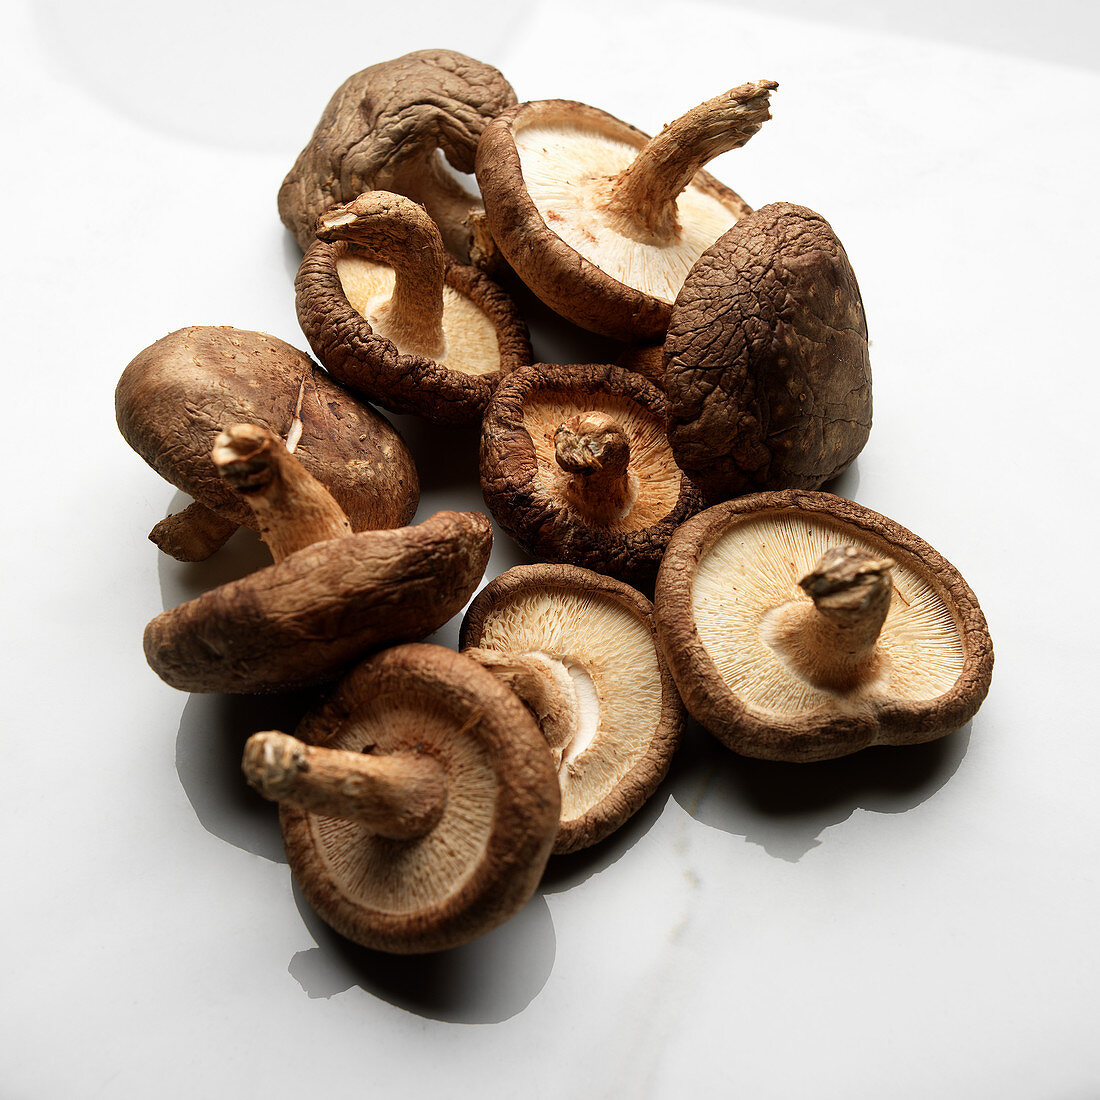 Shiitaki mushrooms on white marble